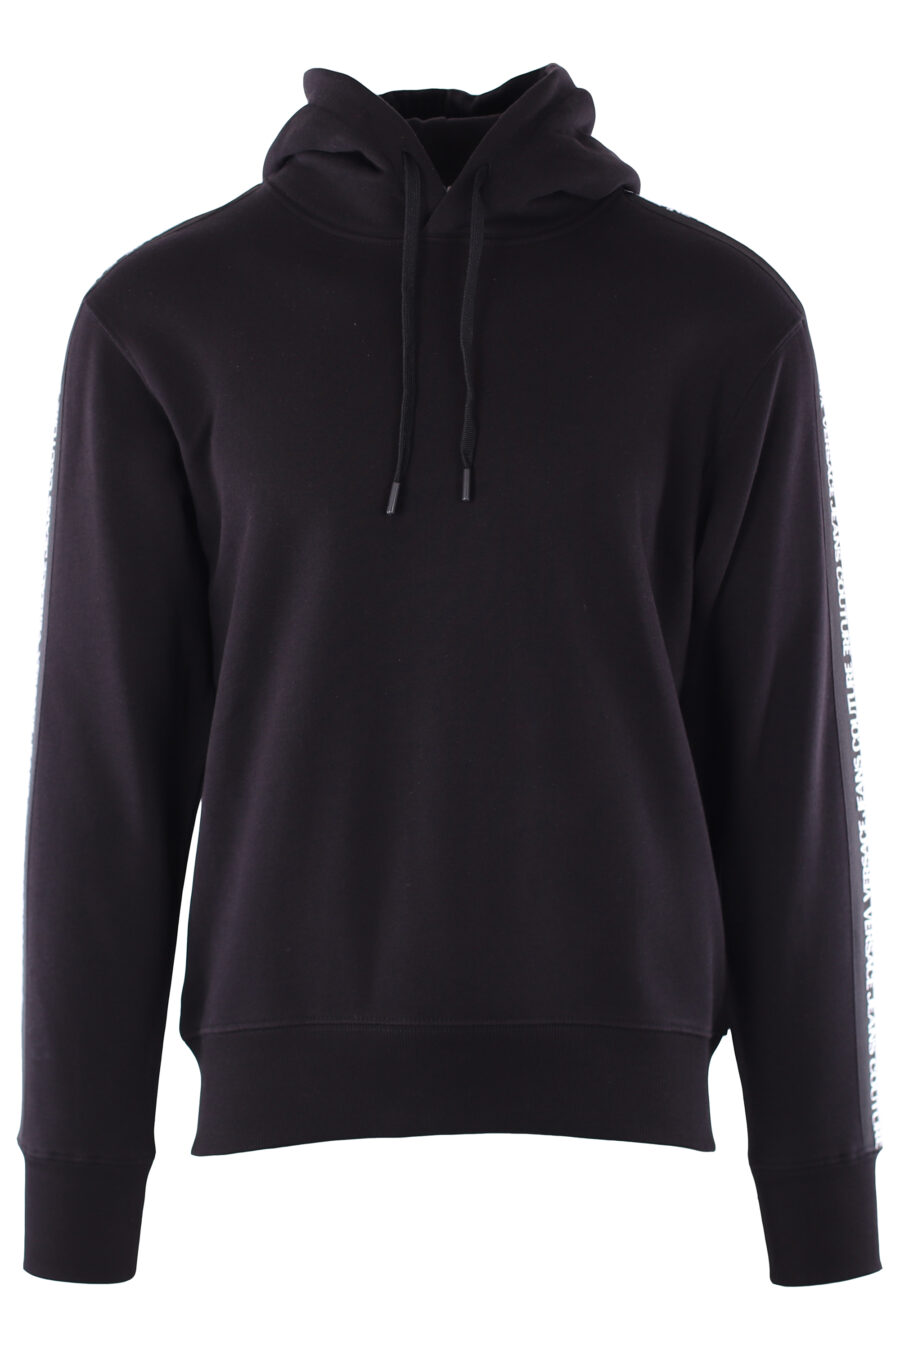 Black hooded sweatshirt with ribbon logo on sleeves - IMG 6449